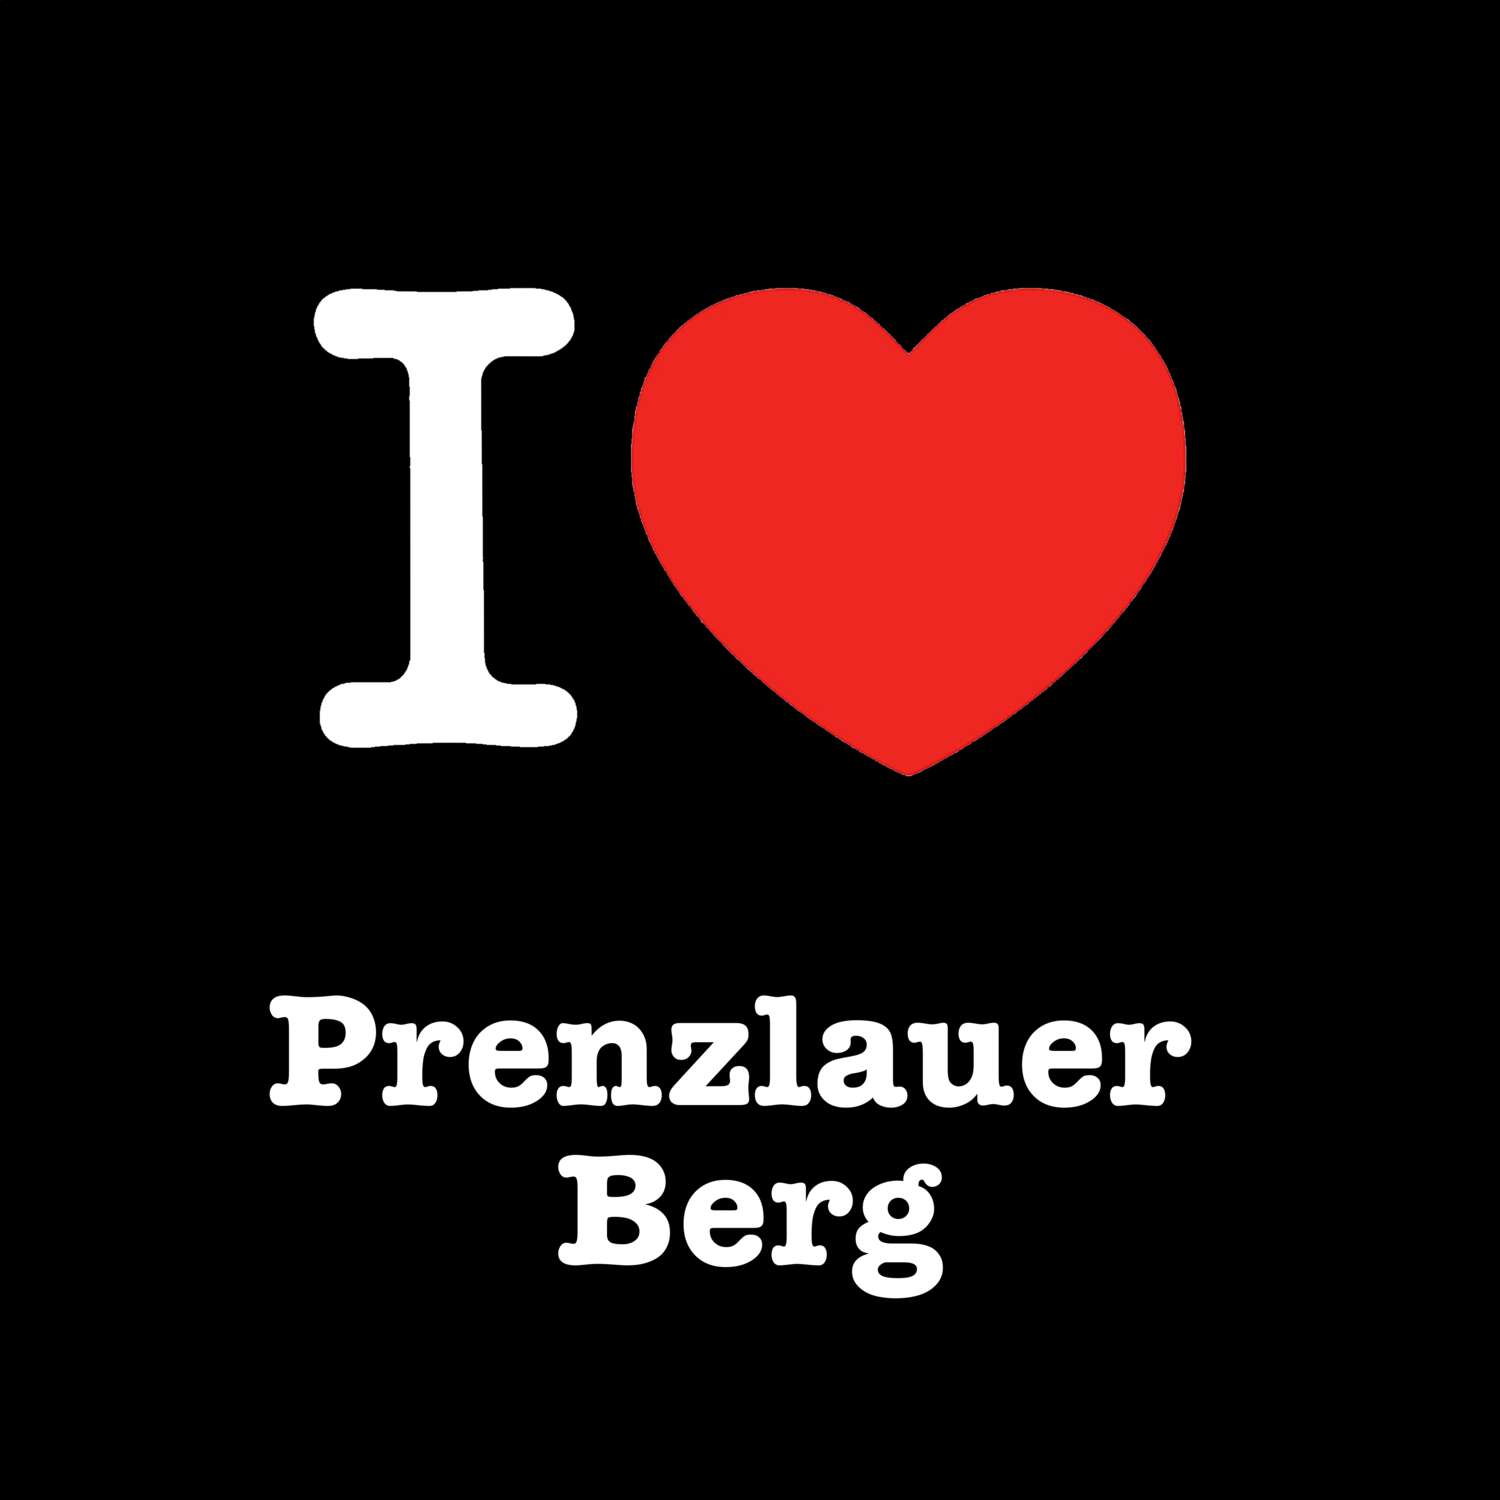 Prenzlauer Berg T-Shirt »I love«